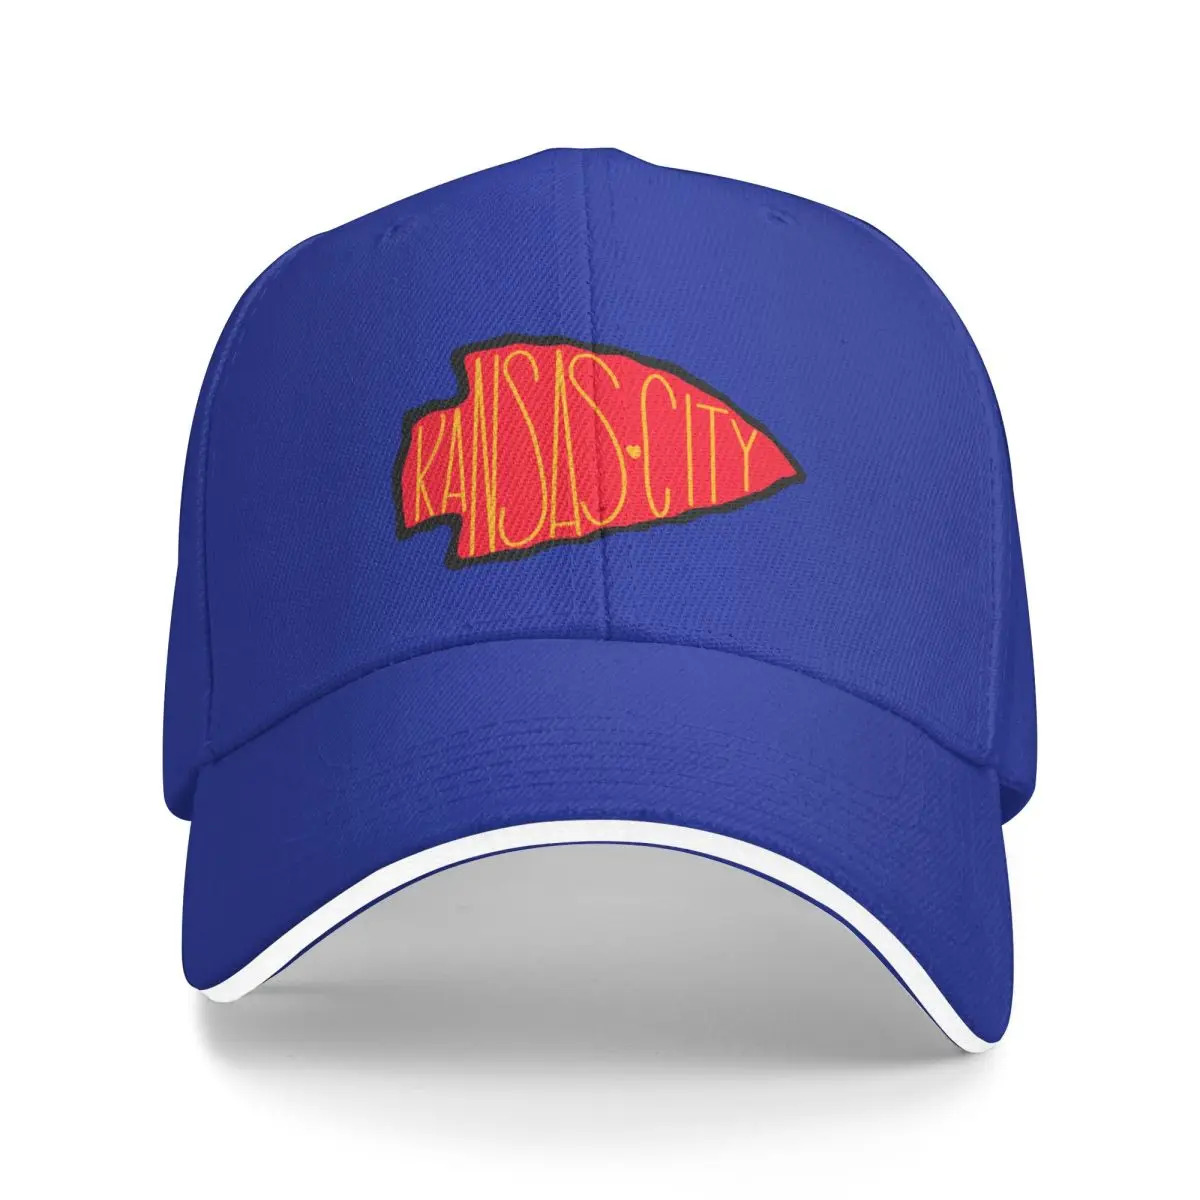 New Kansas City Kingdom Baseball Cap beach hat fishing hat Hats For Women  Men's